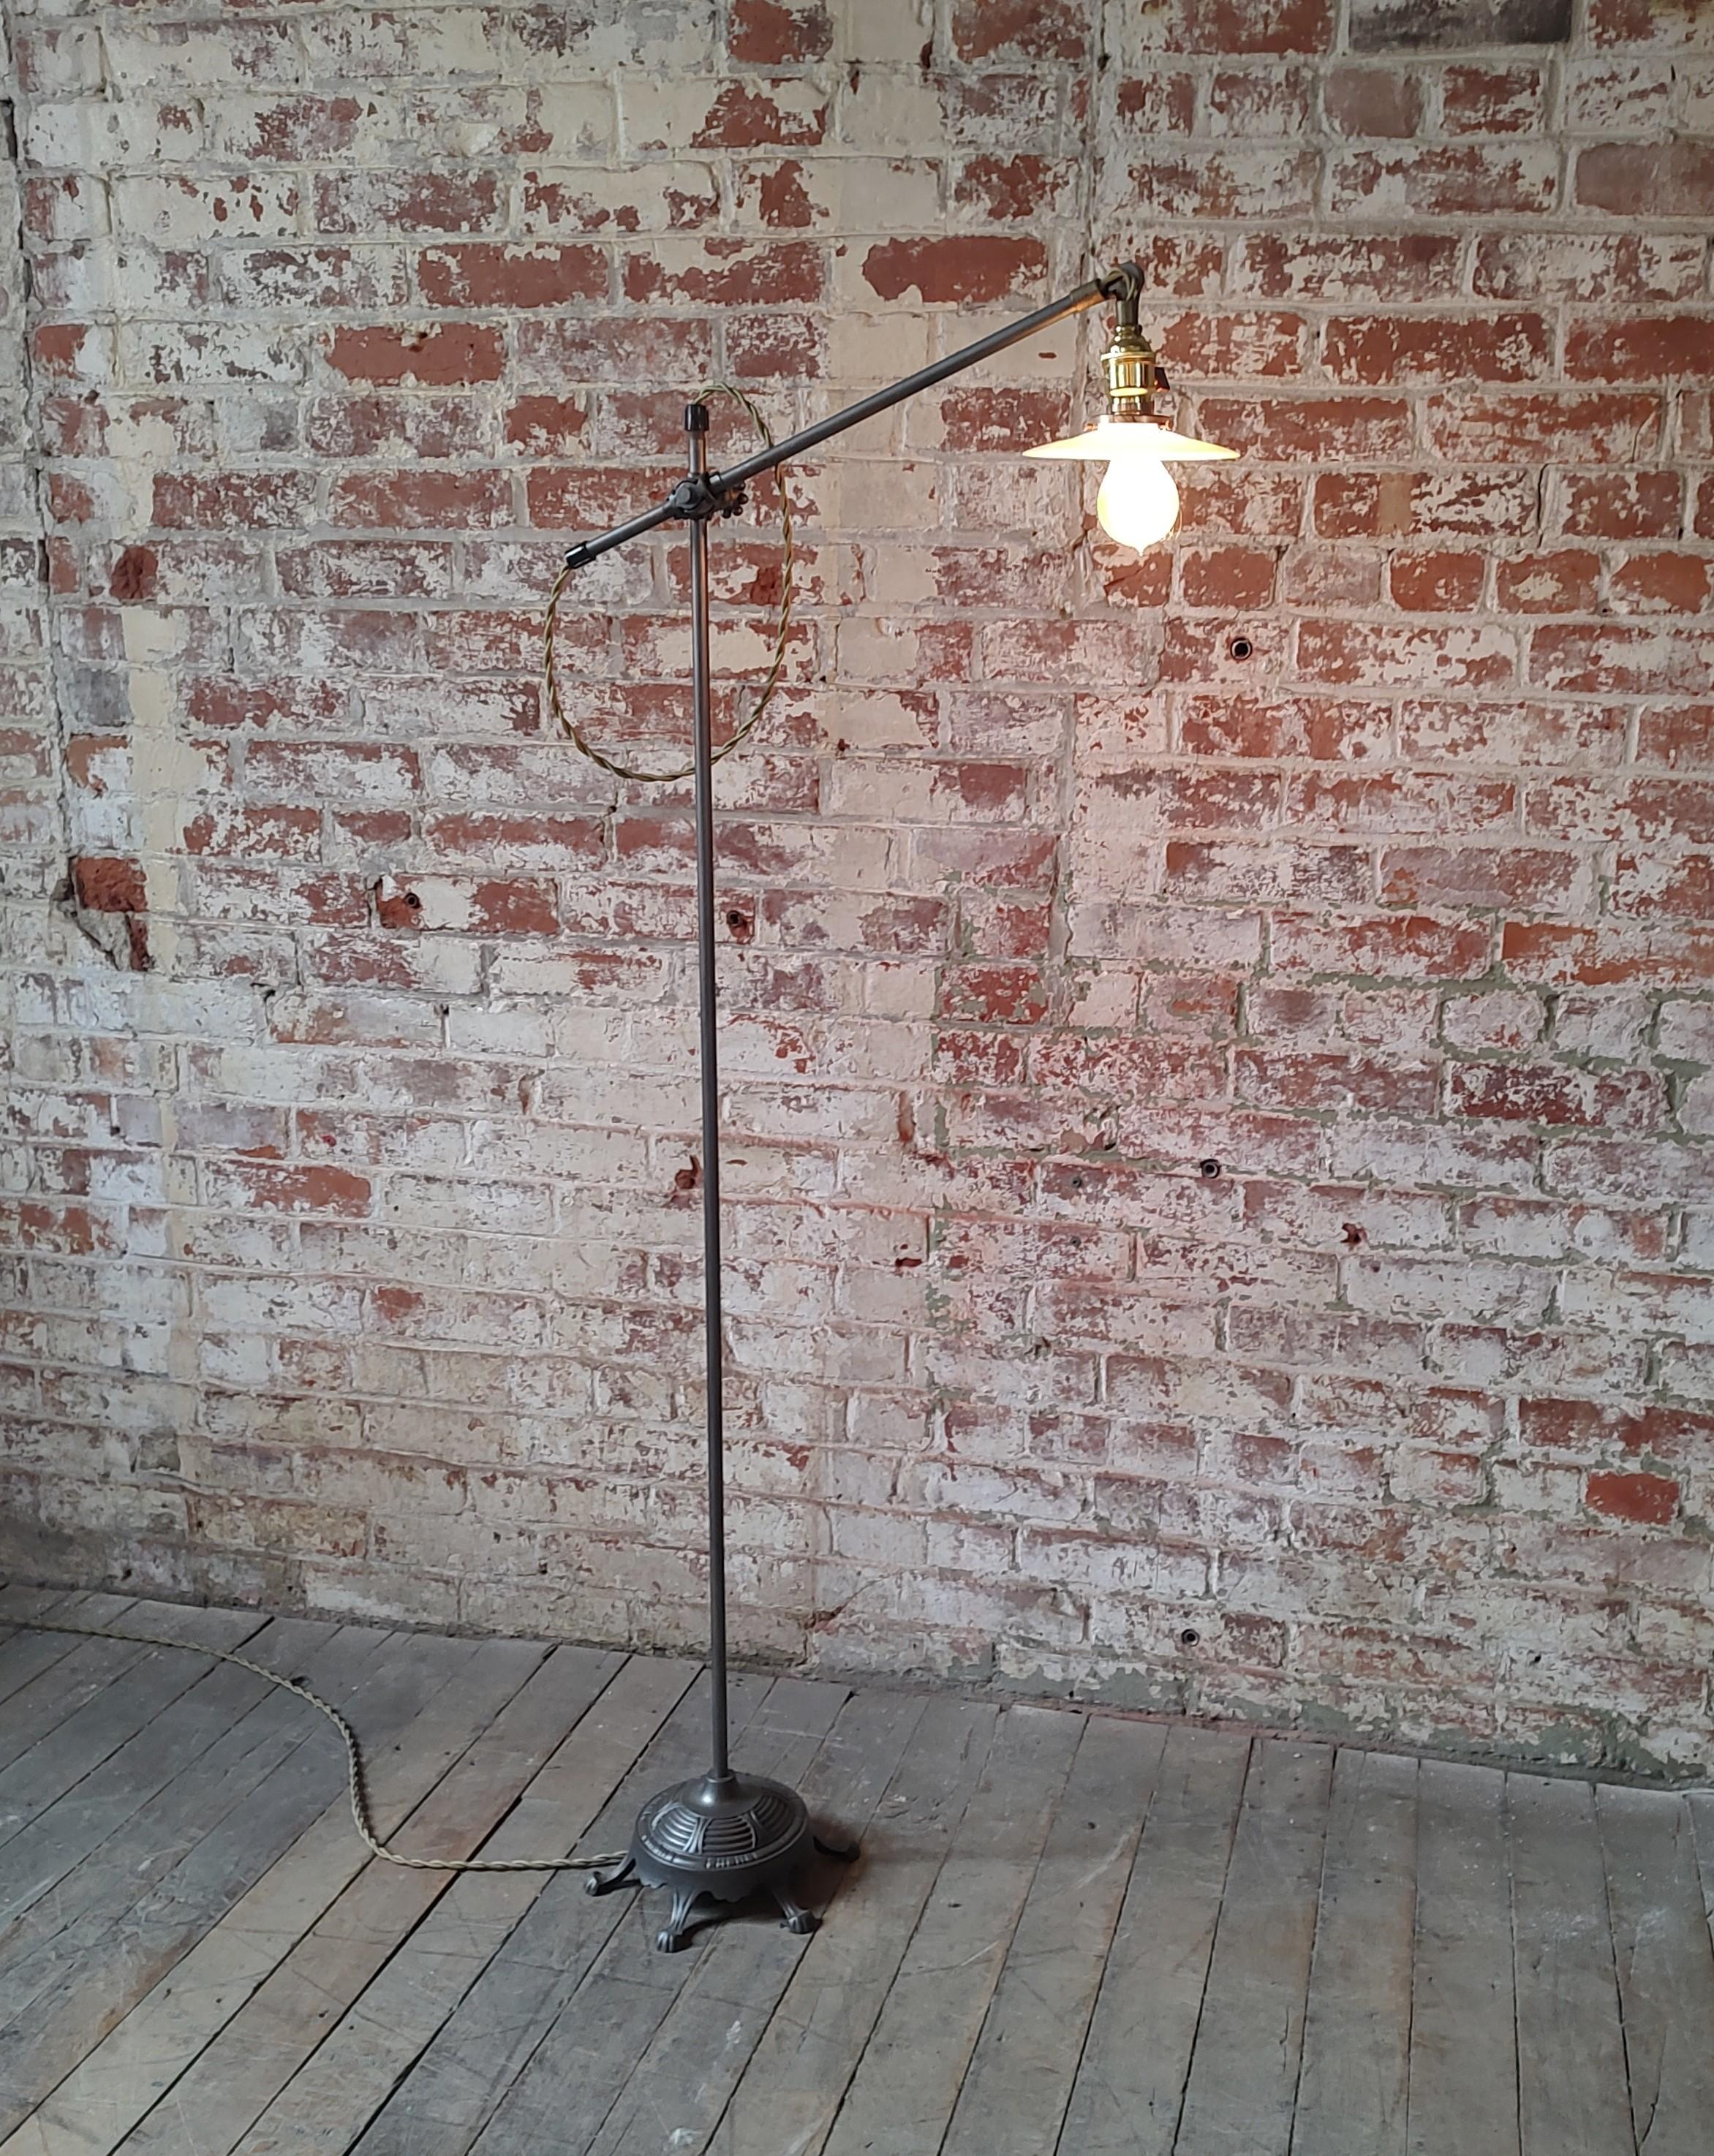 Adjustable factory floor lamp

Overall Height: 52 1/4